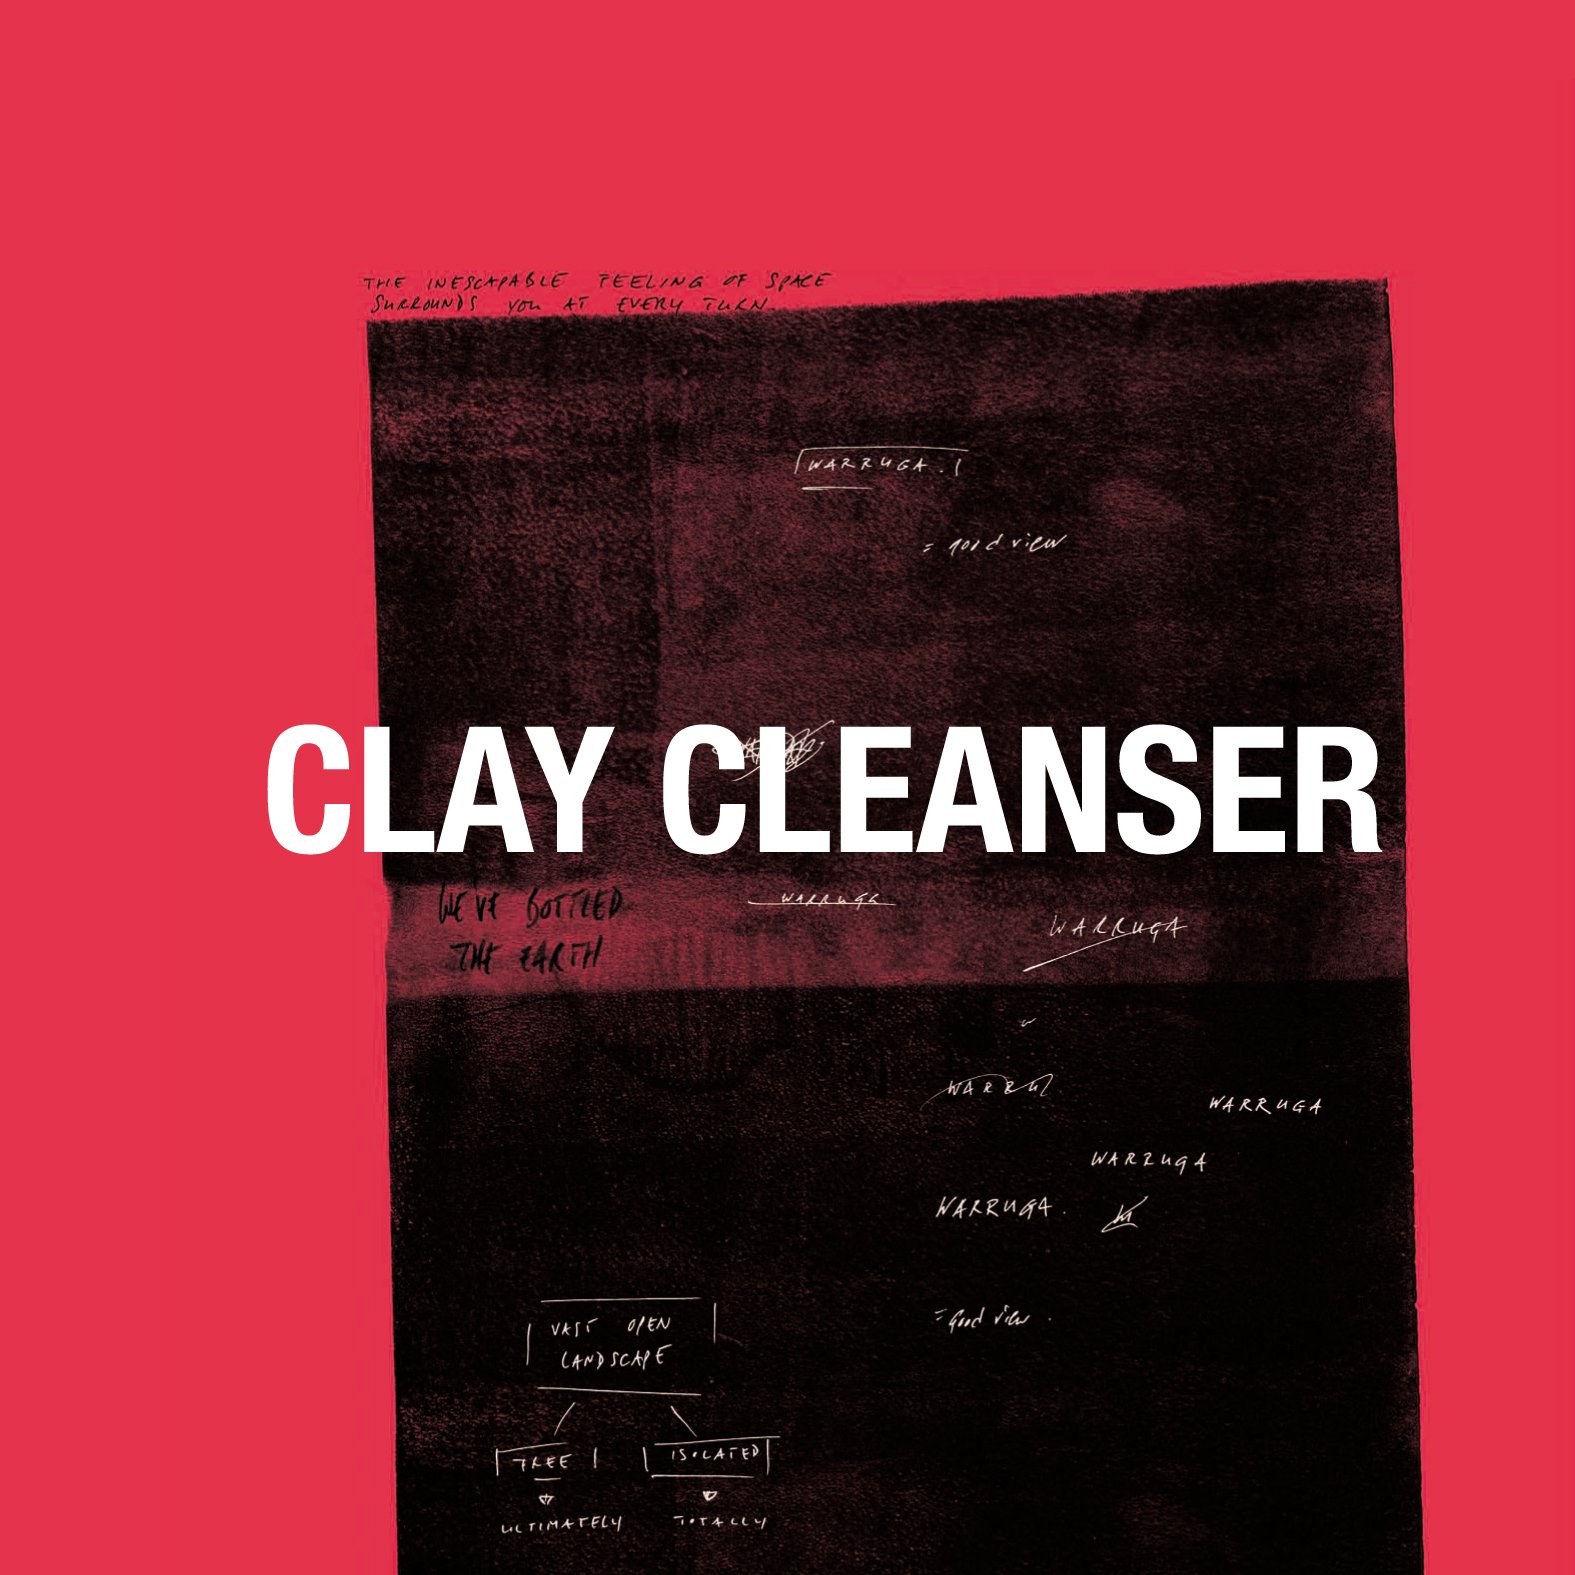 clay cleaner set up A LR www-16.jpg